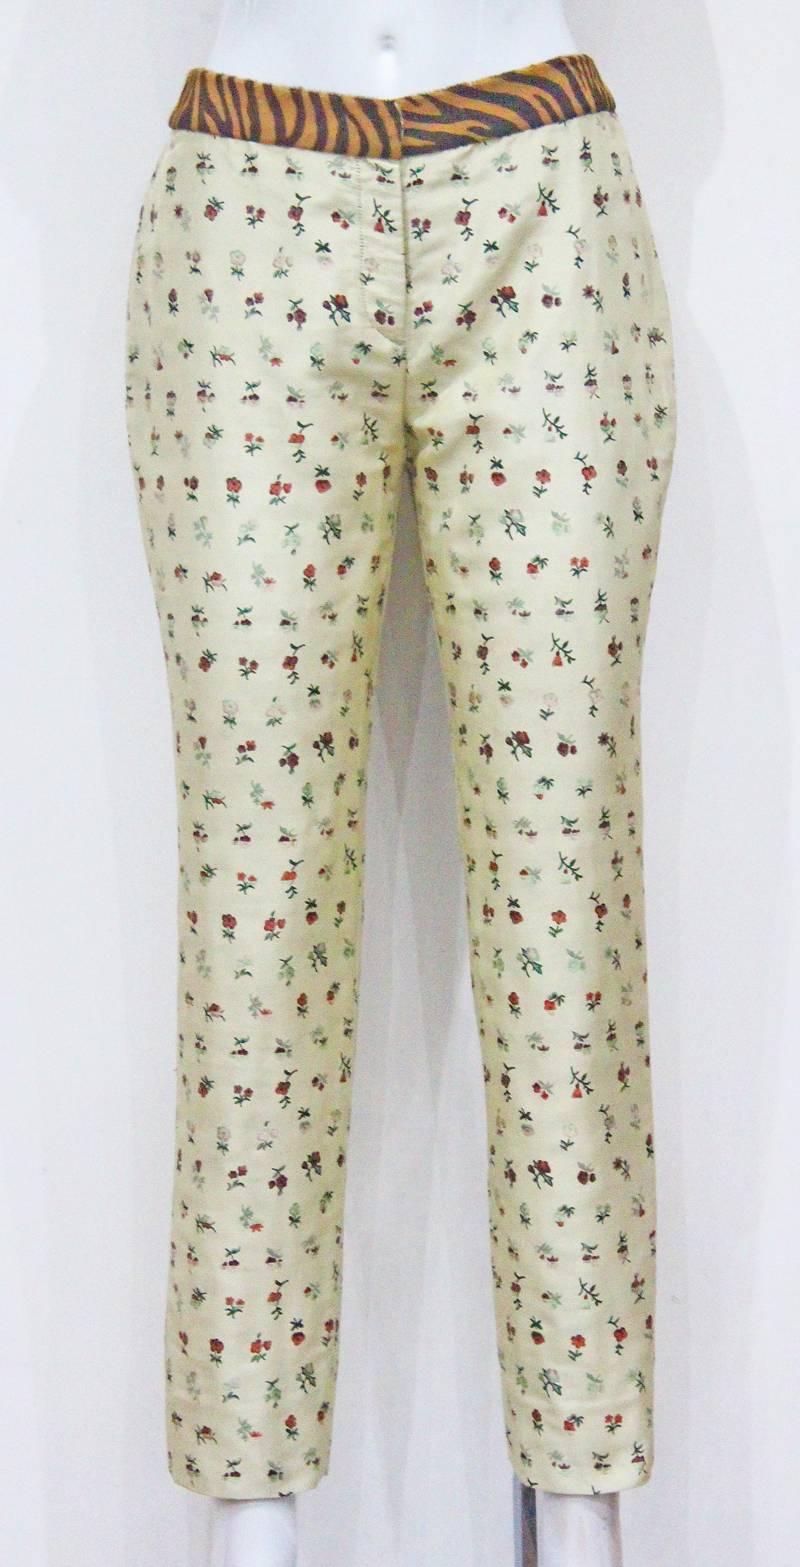 Beige Gianni Versace floral silk cigarette pants with zebra pony skin belt, c. 1990s